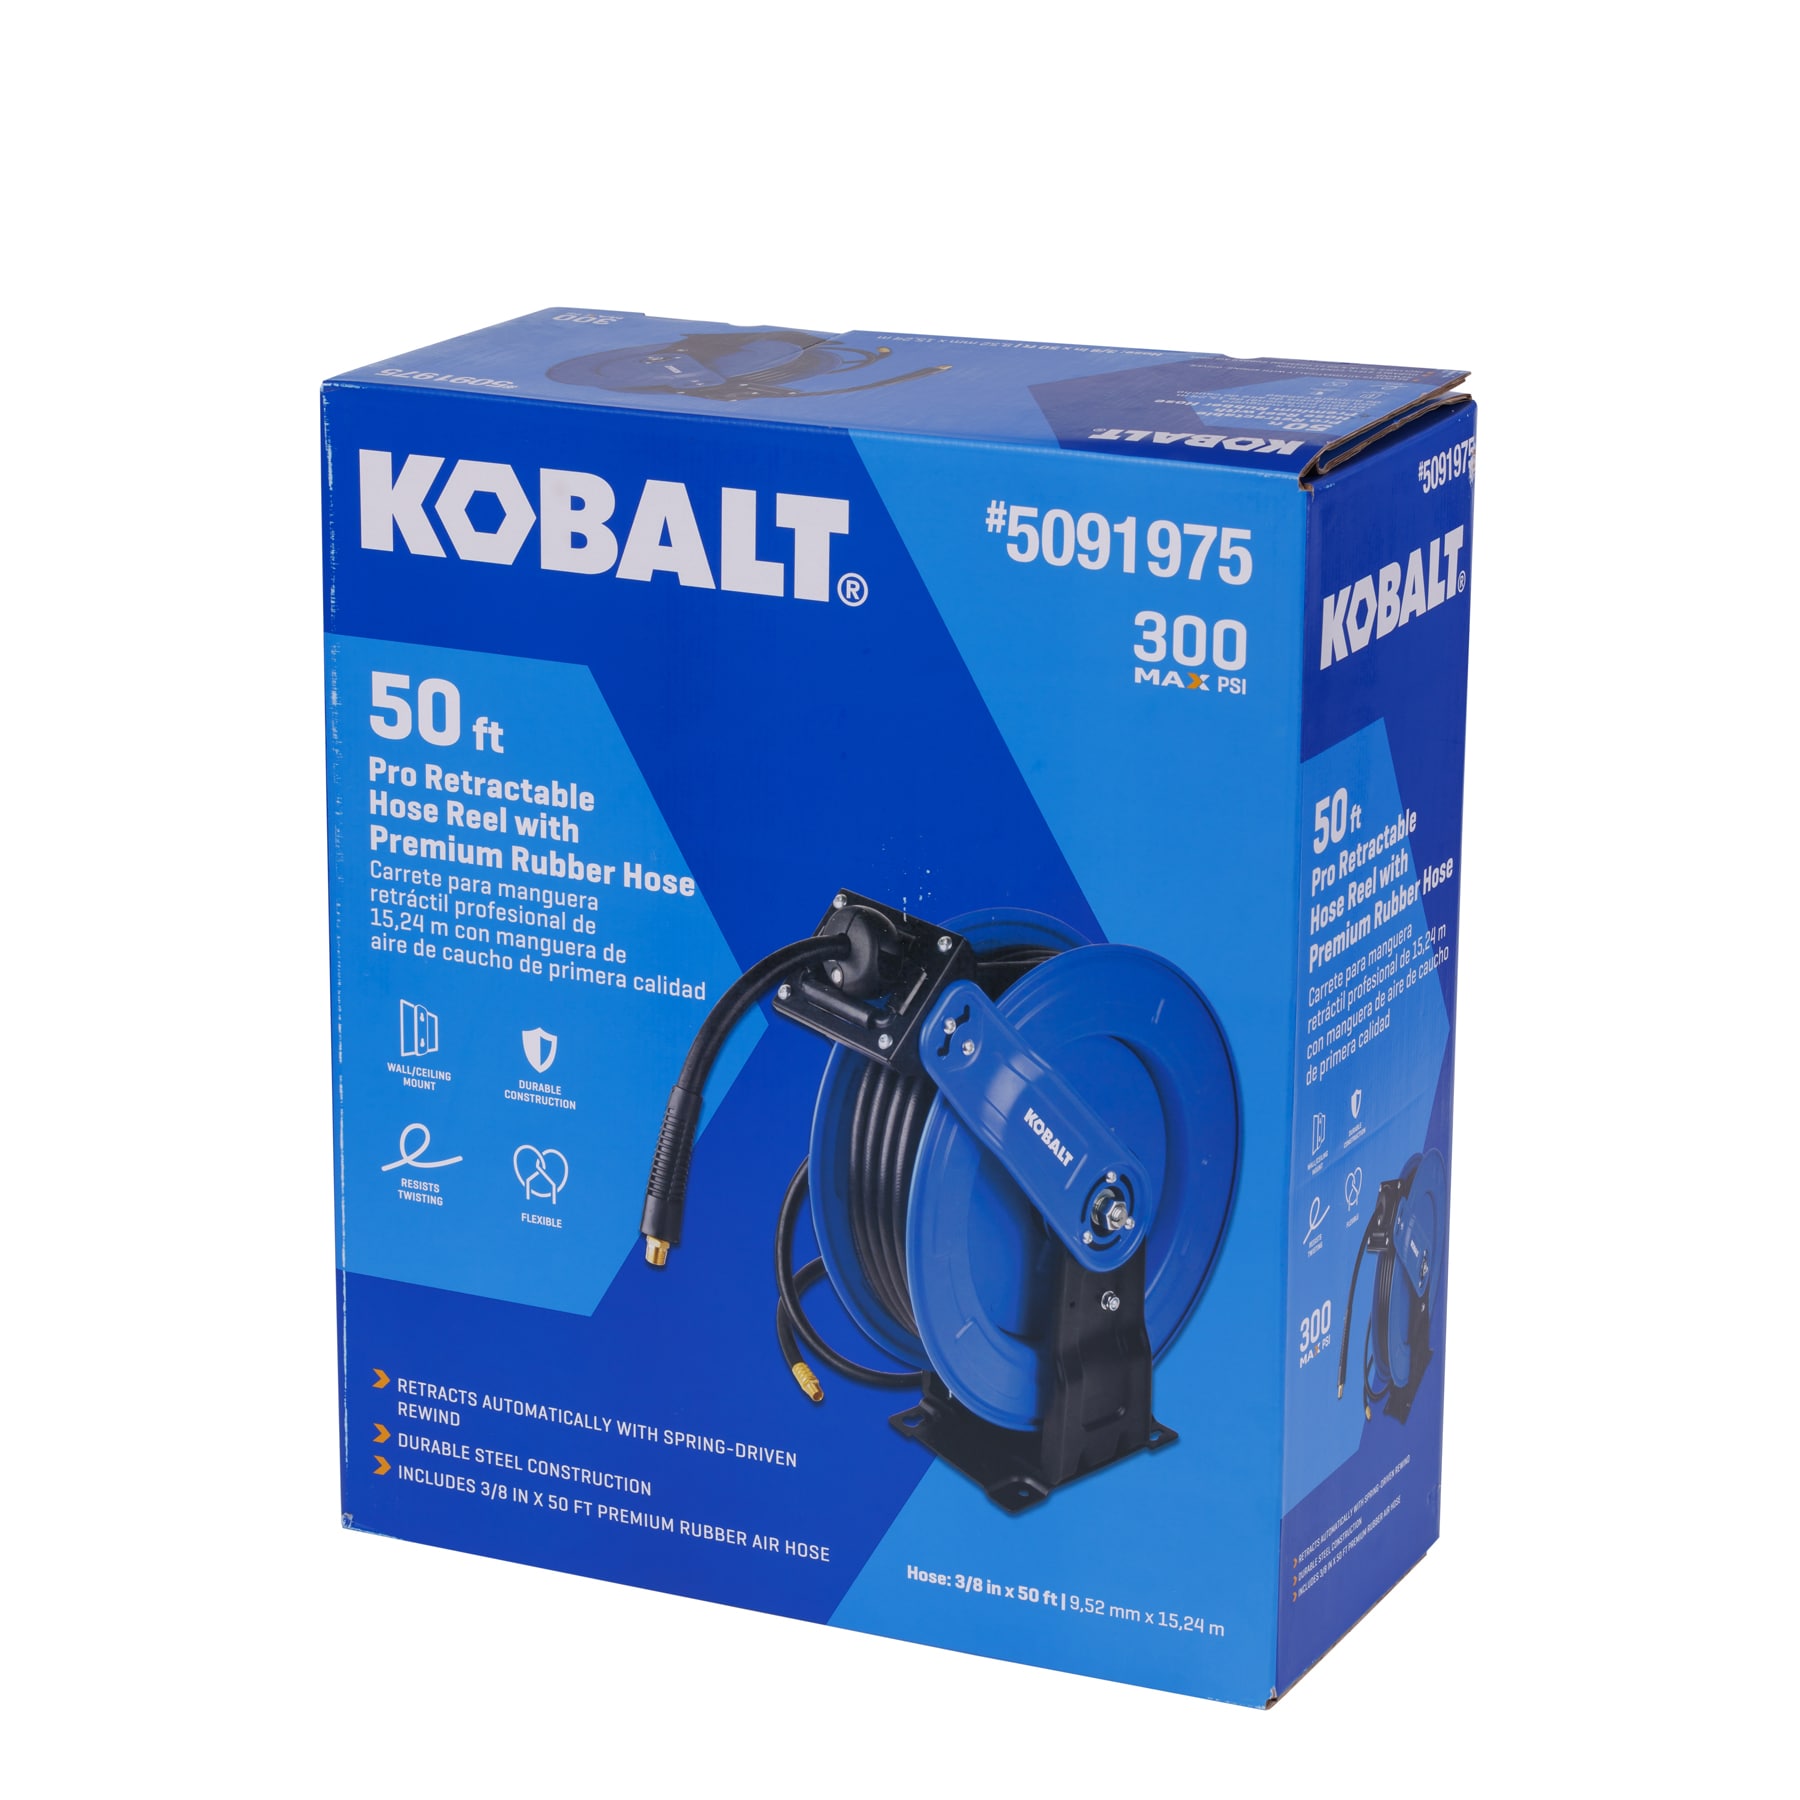 Kobalt Pro Retractable Reel w/3/8-in x 50-ft Rubber Hose | SGY-AIR266